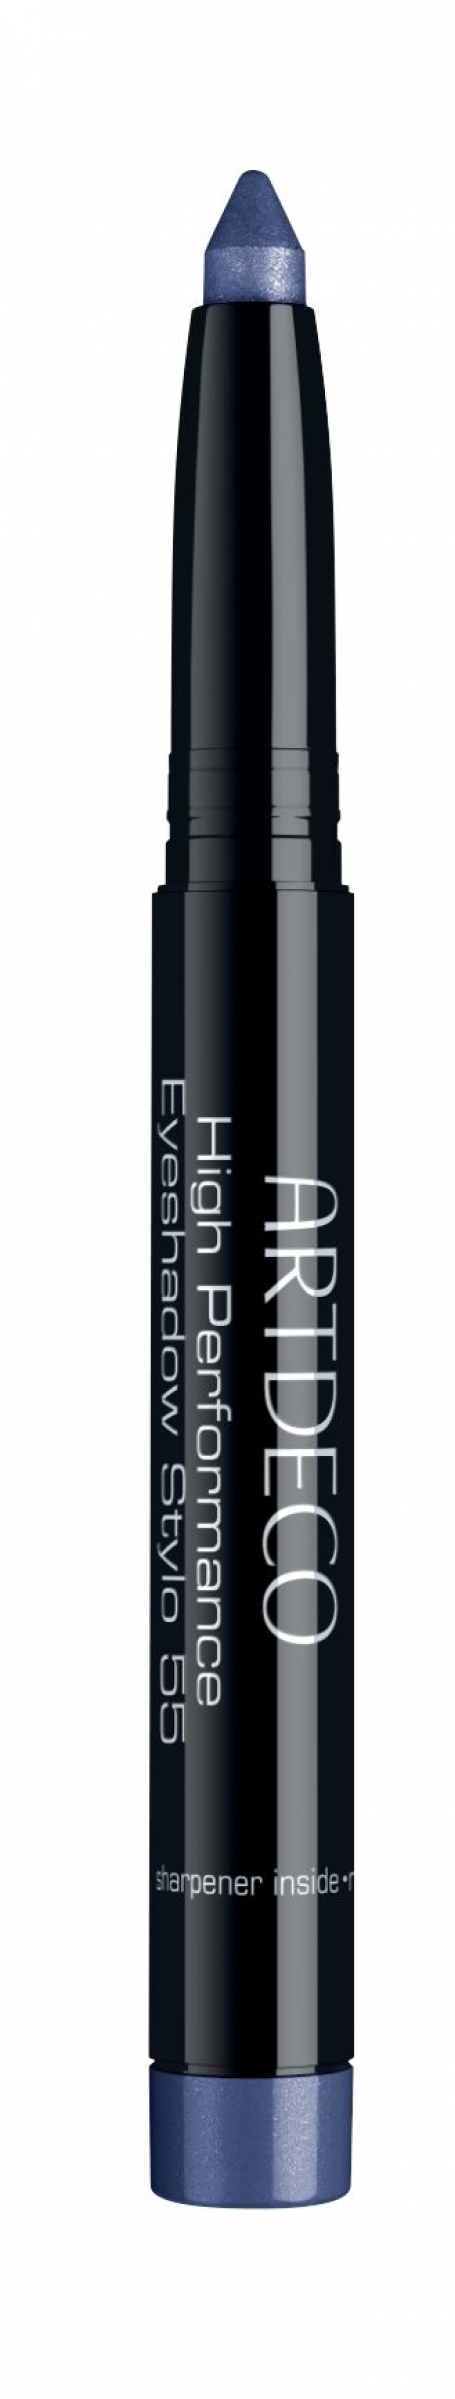 High performance Eyeshadow stylo #55 Vitamin sea - kopie